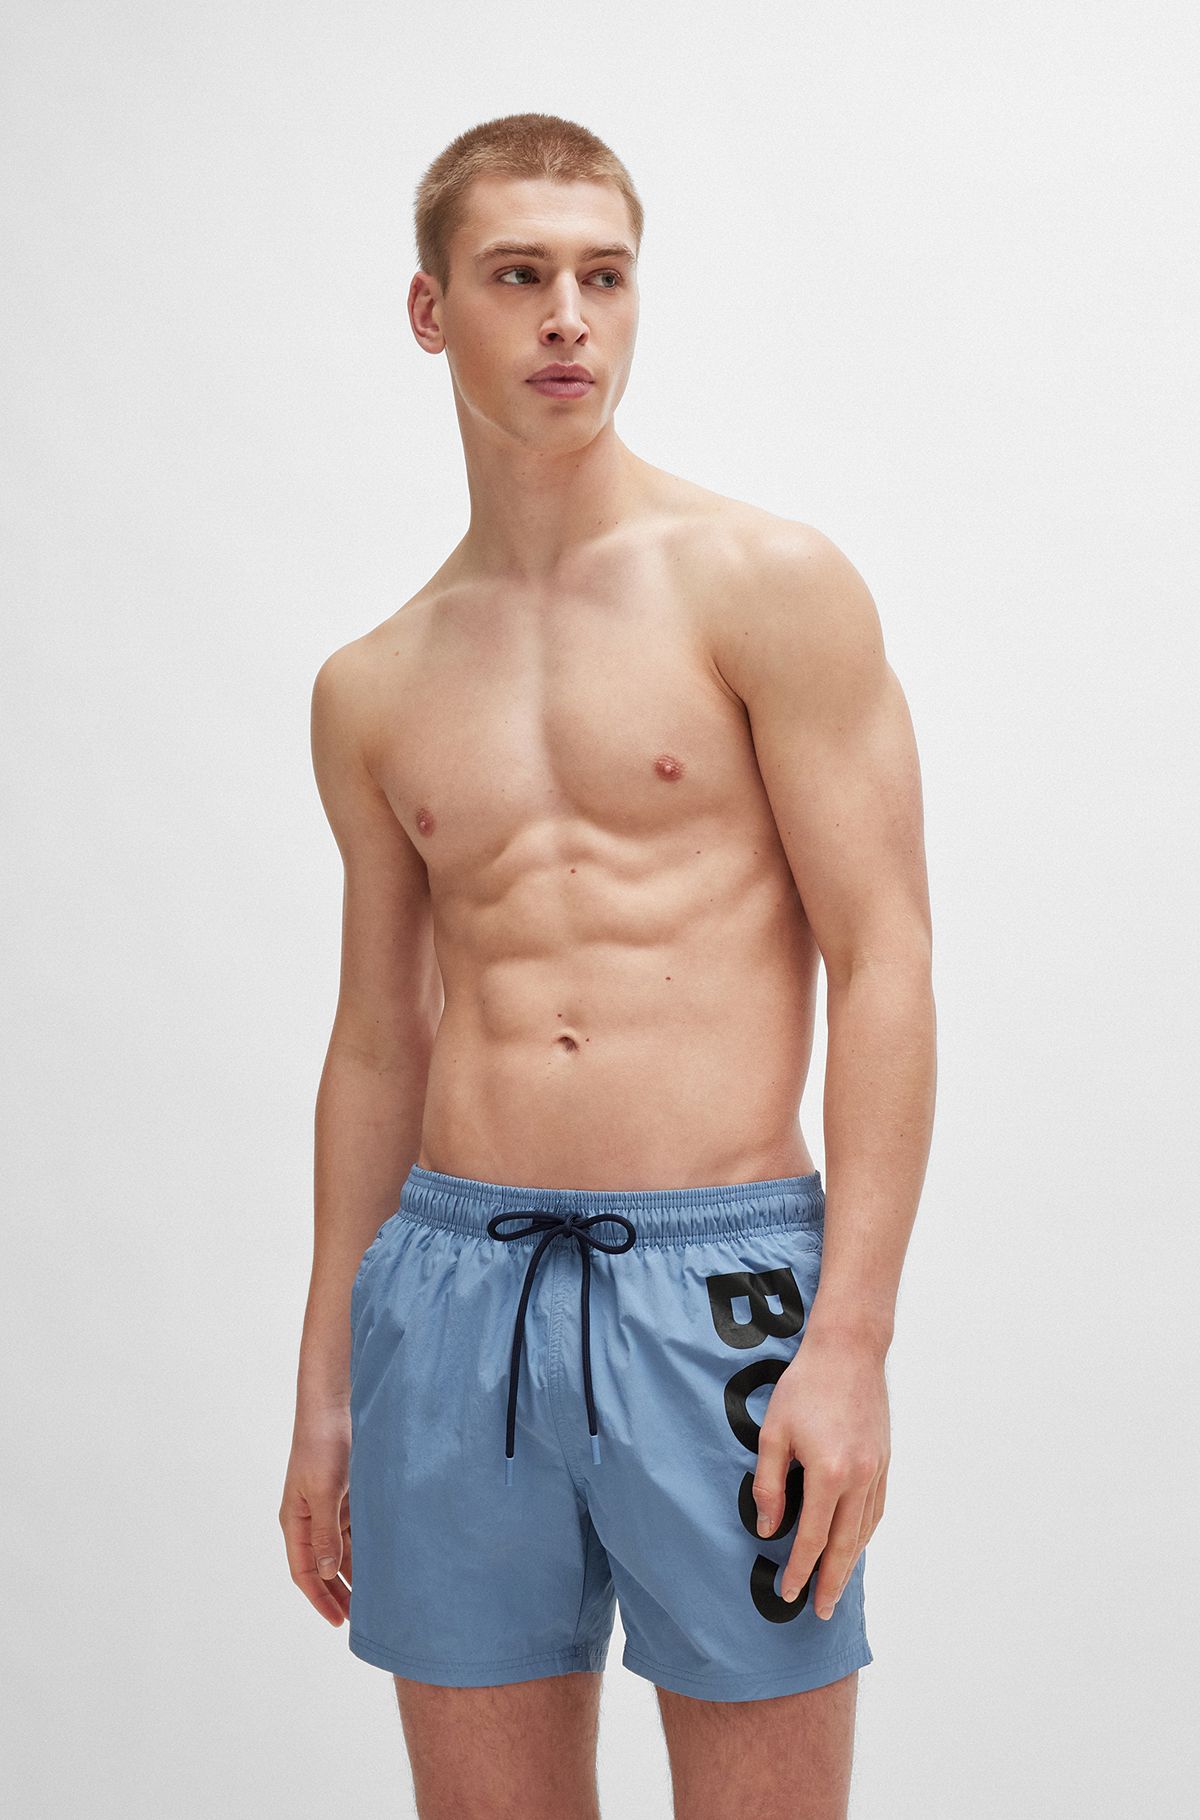 Vertical-logo-print swim shorts in quick-dry poplin, Light Blue